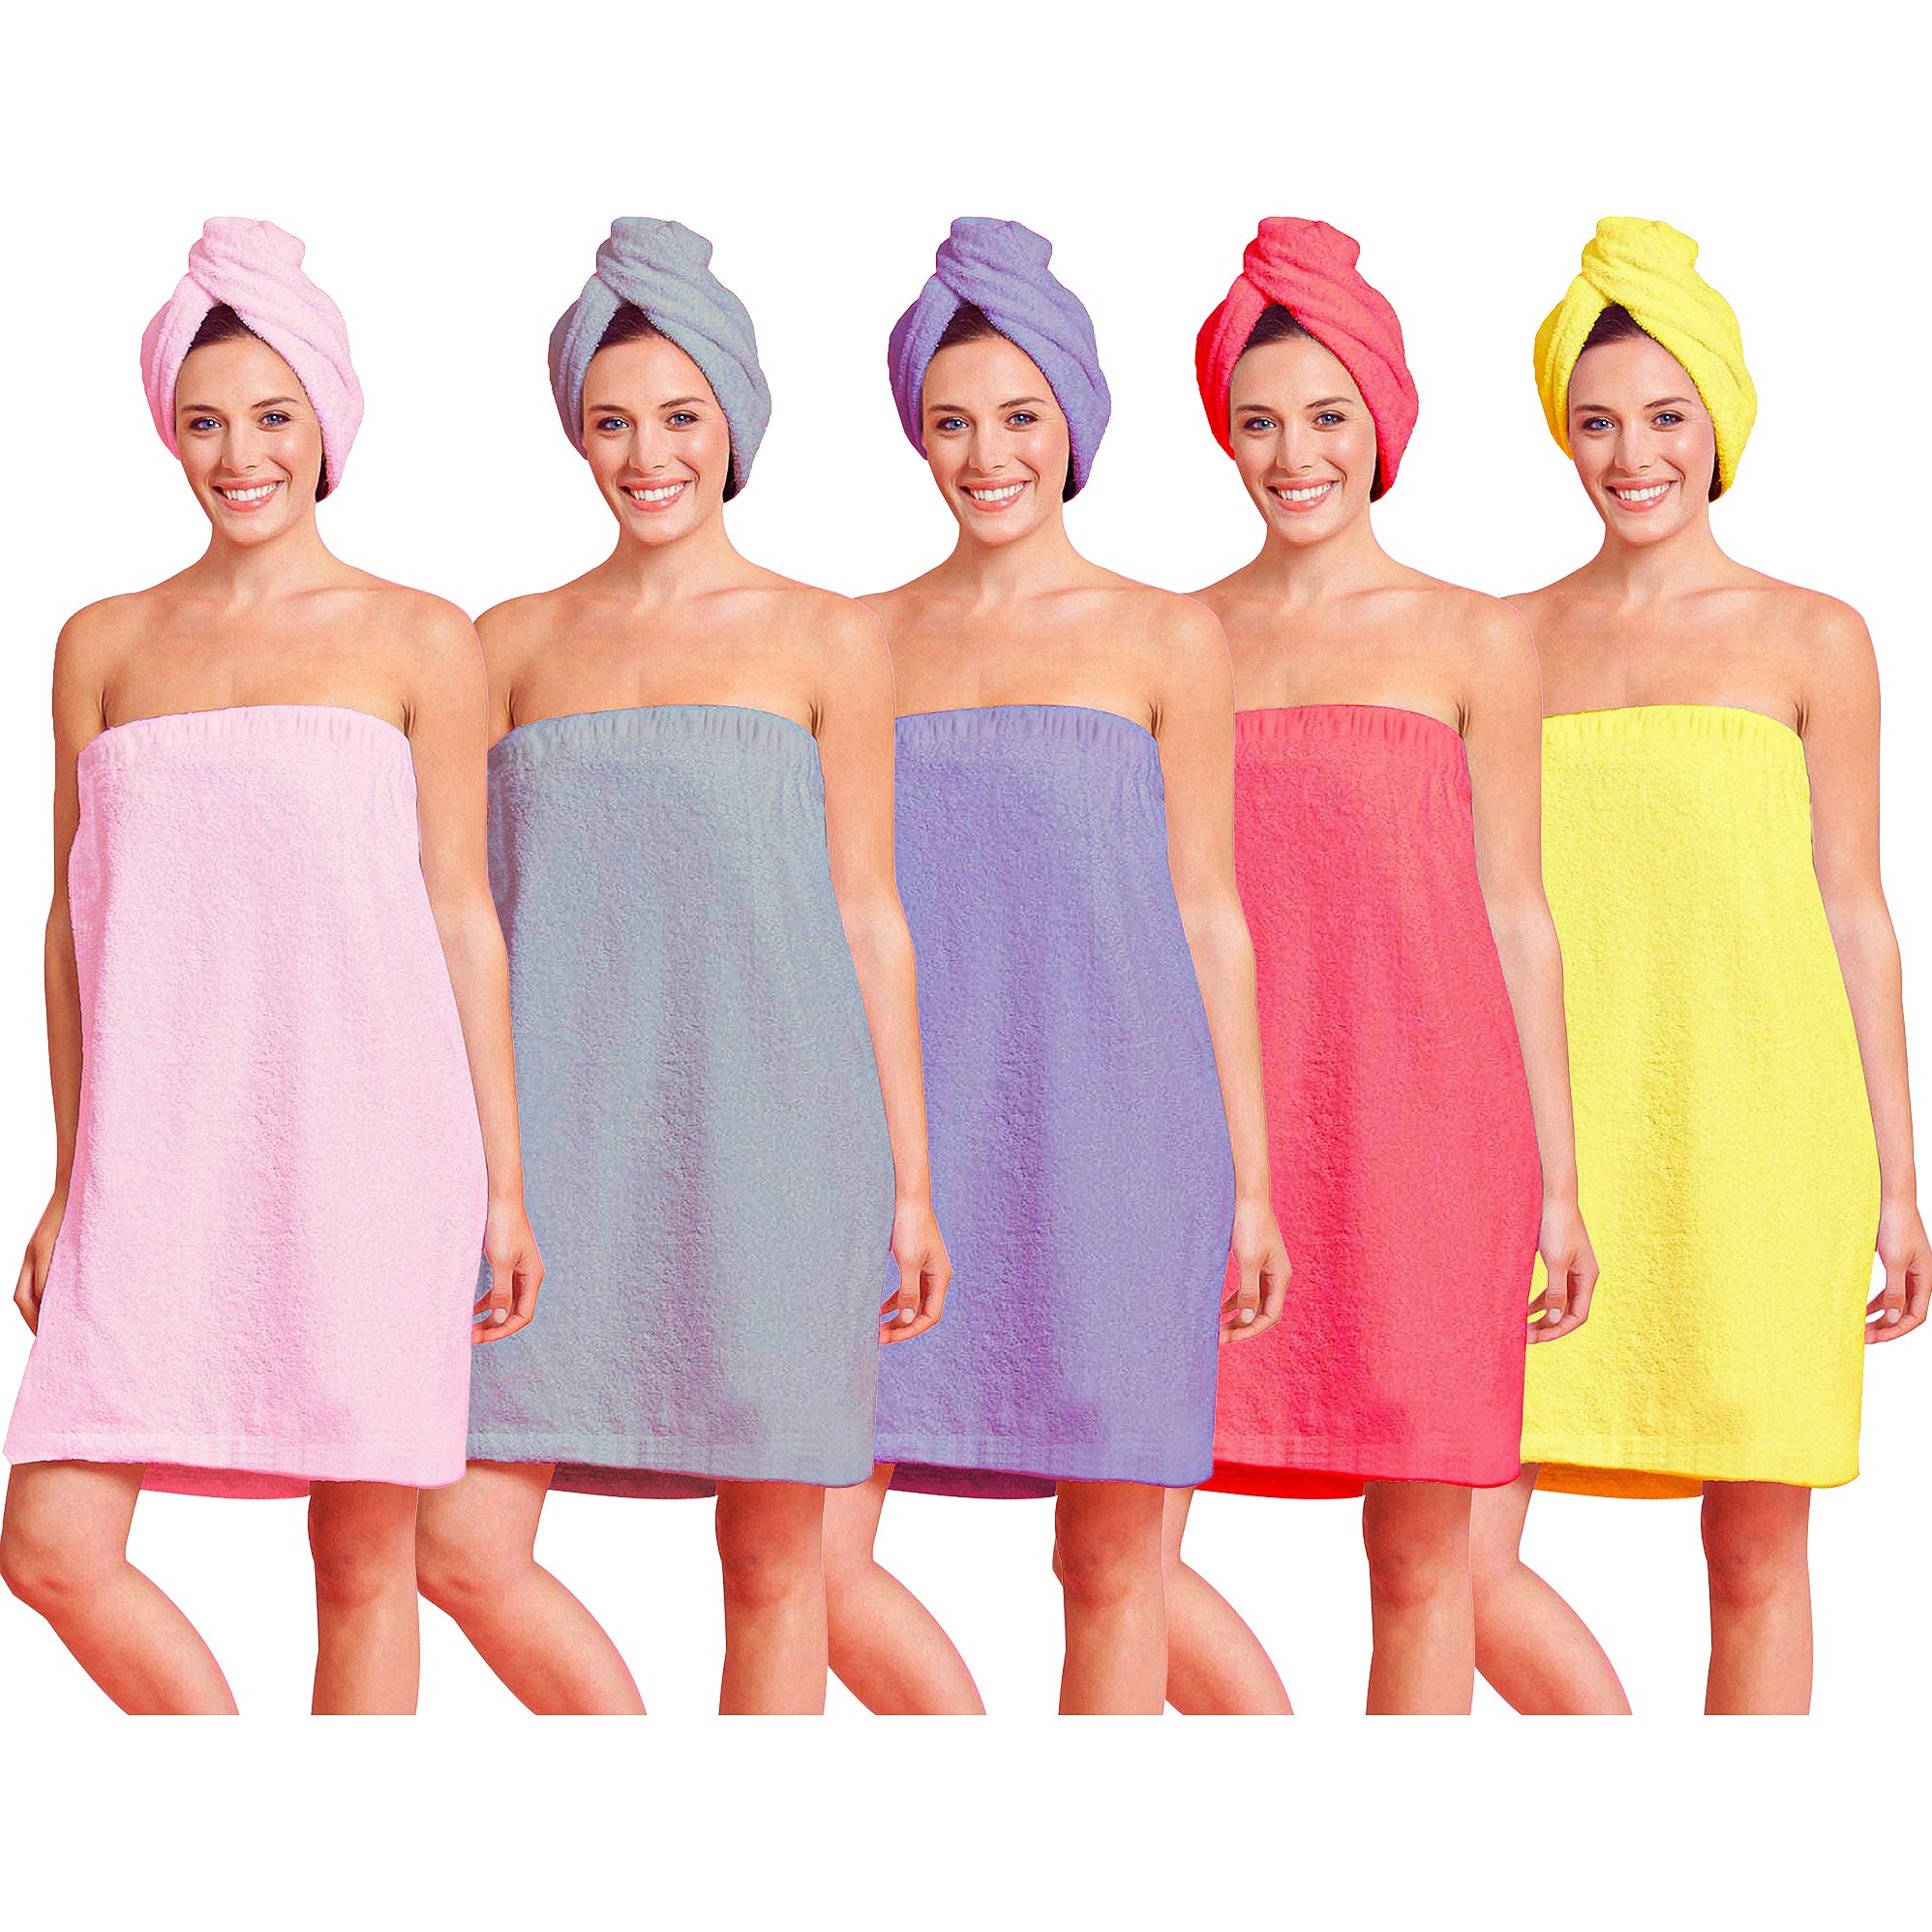 2-Piece Women's Spa Body Wrap & Hair Towel - Yellow